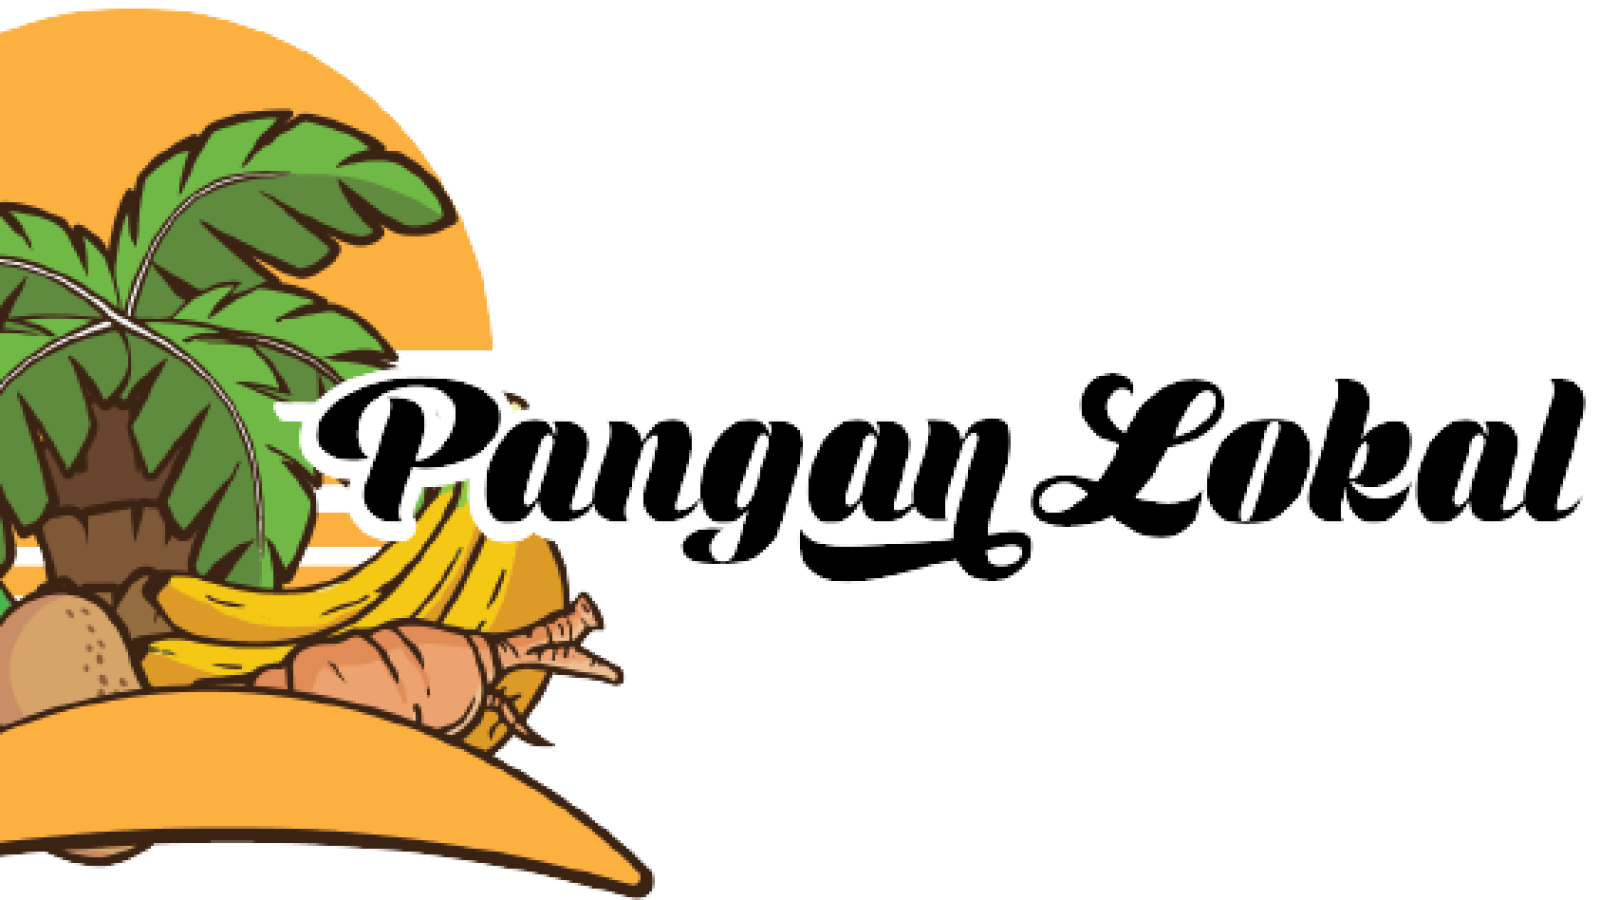 pangan_lokal-removebg-preview